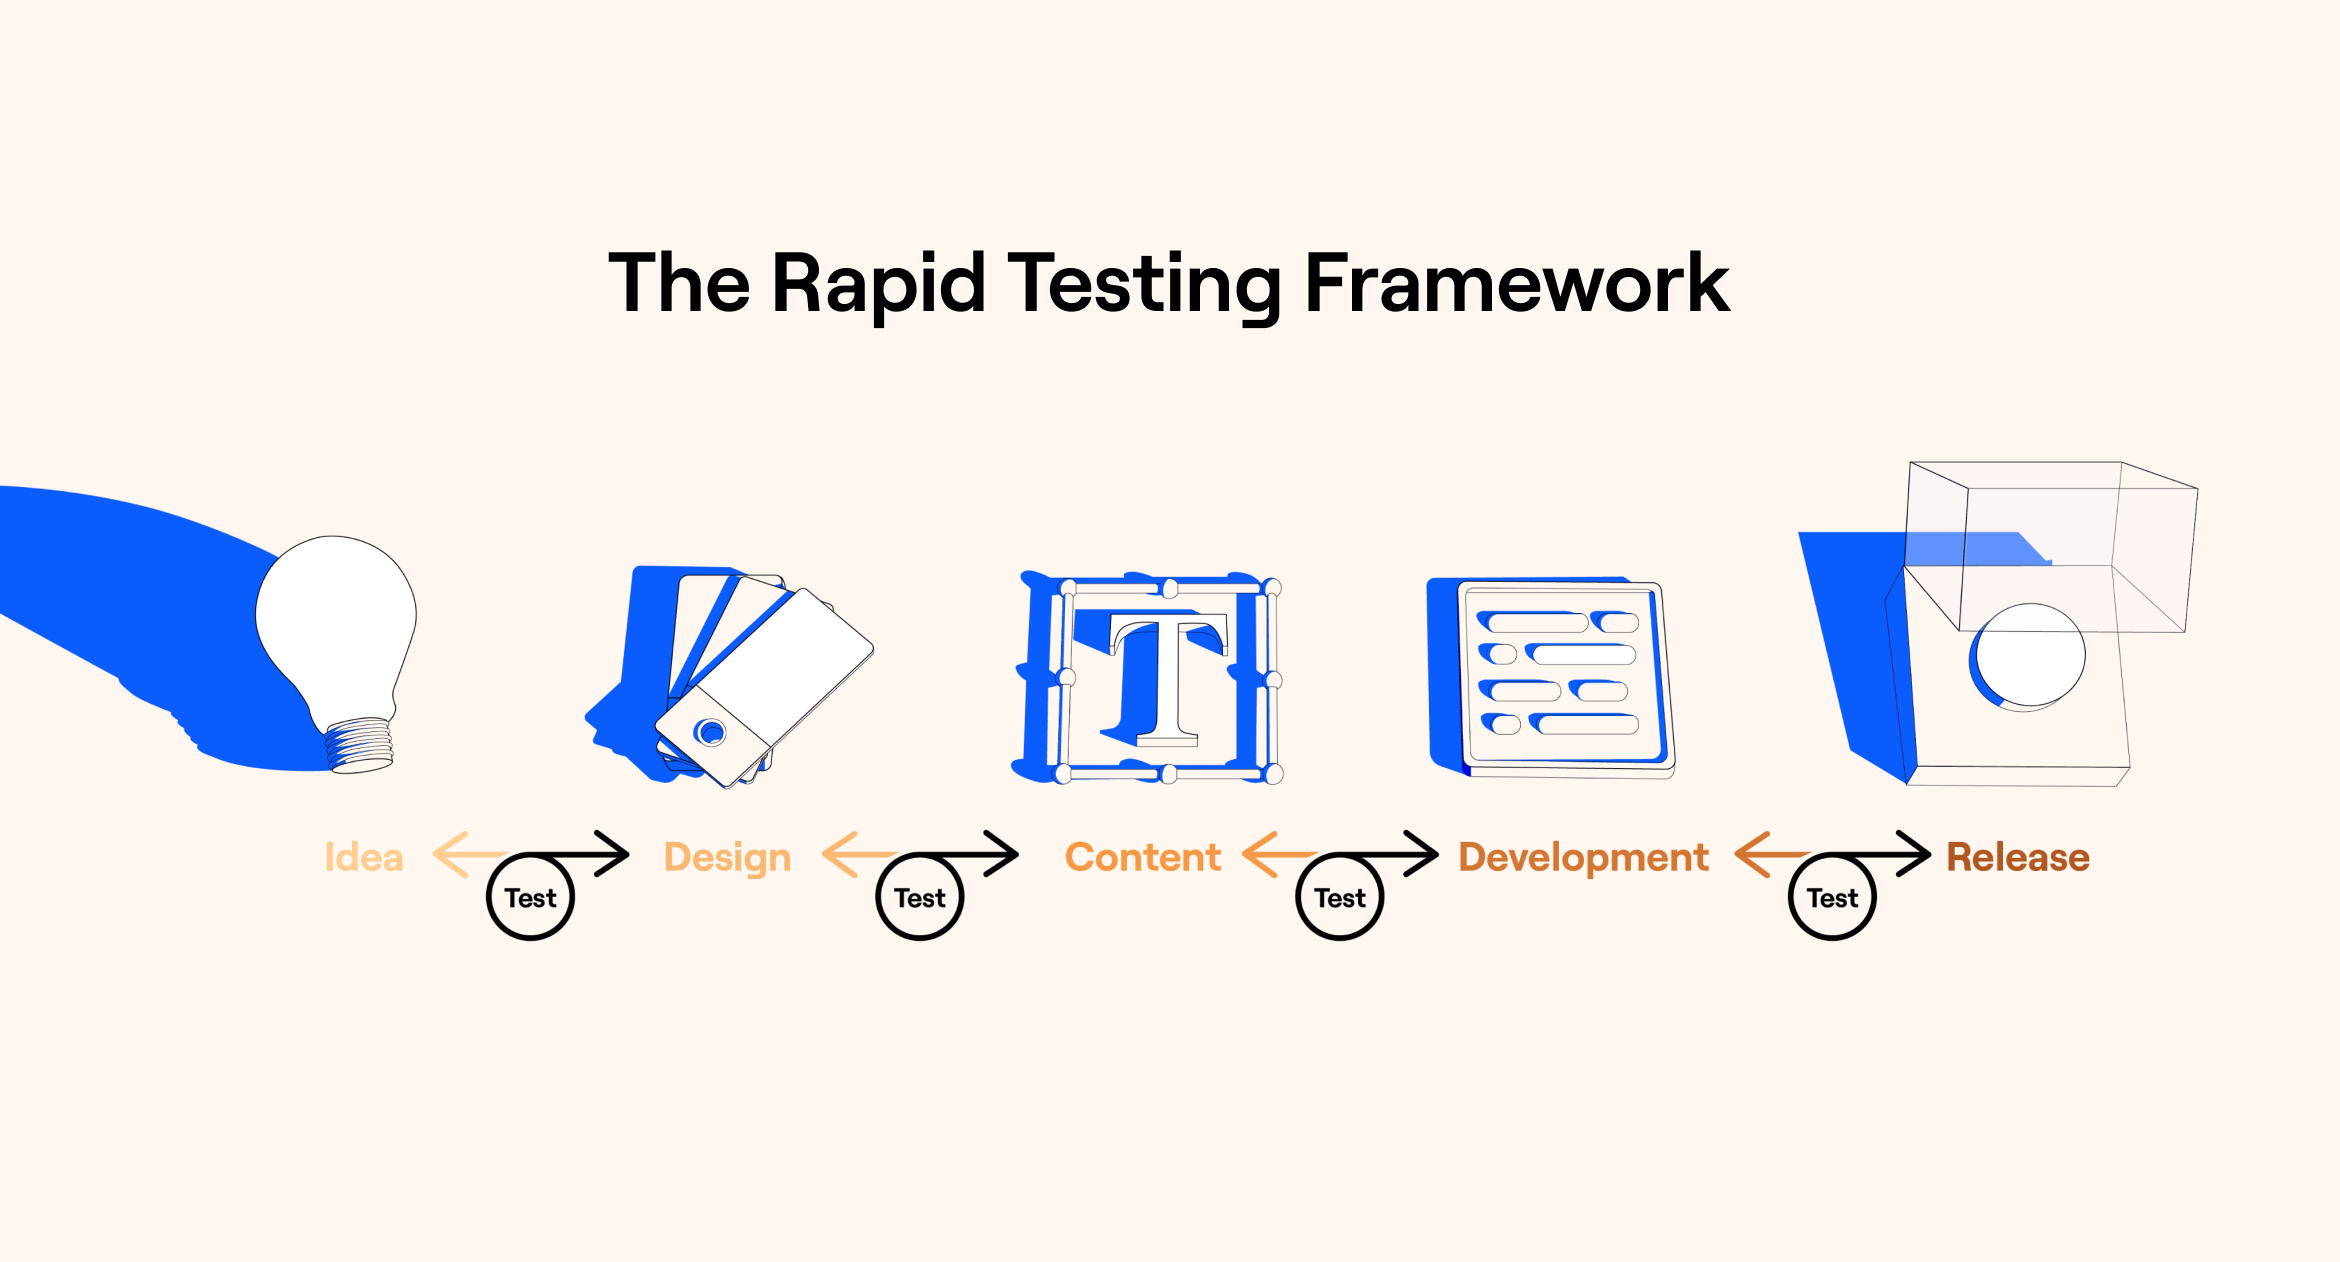 The Rapid Testing Framework by Maze